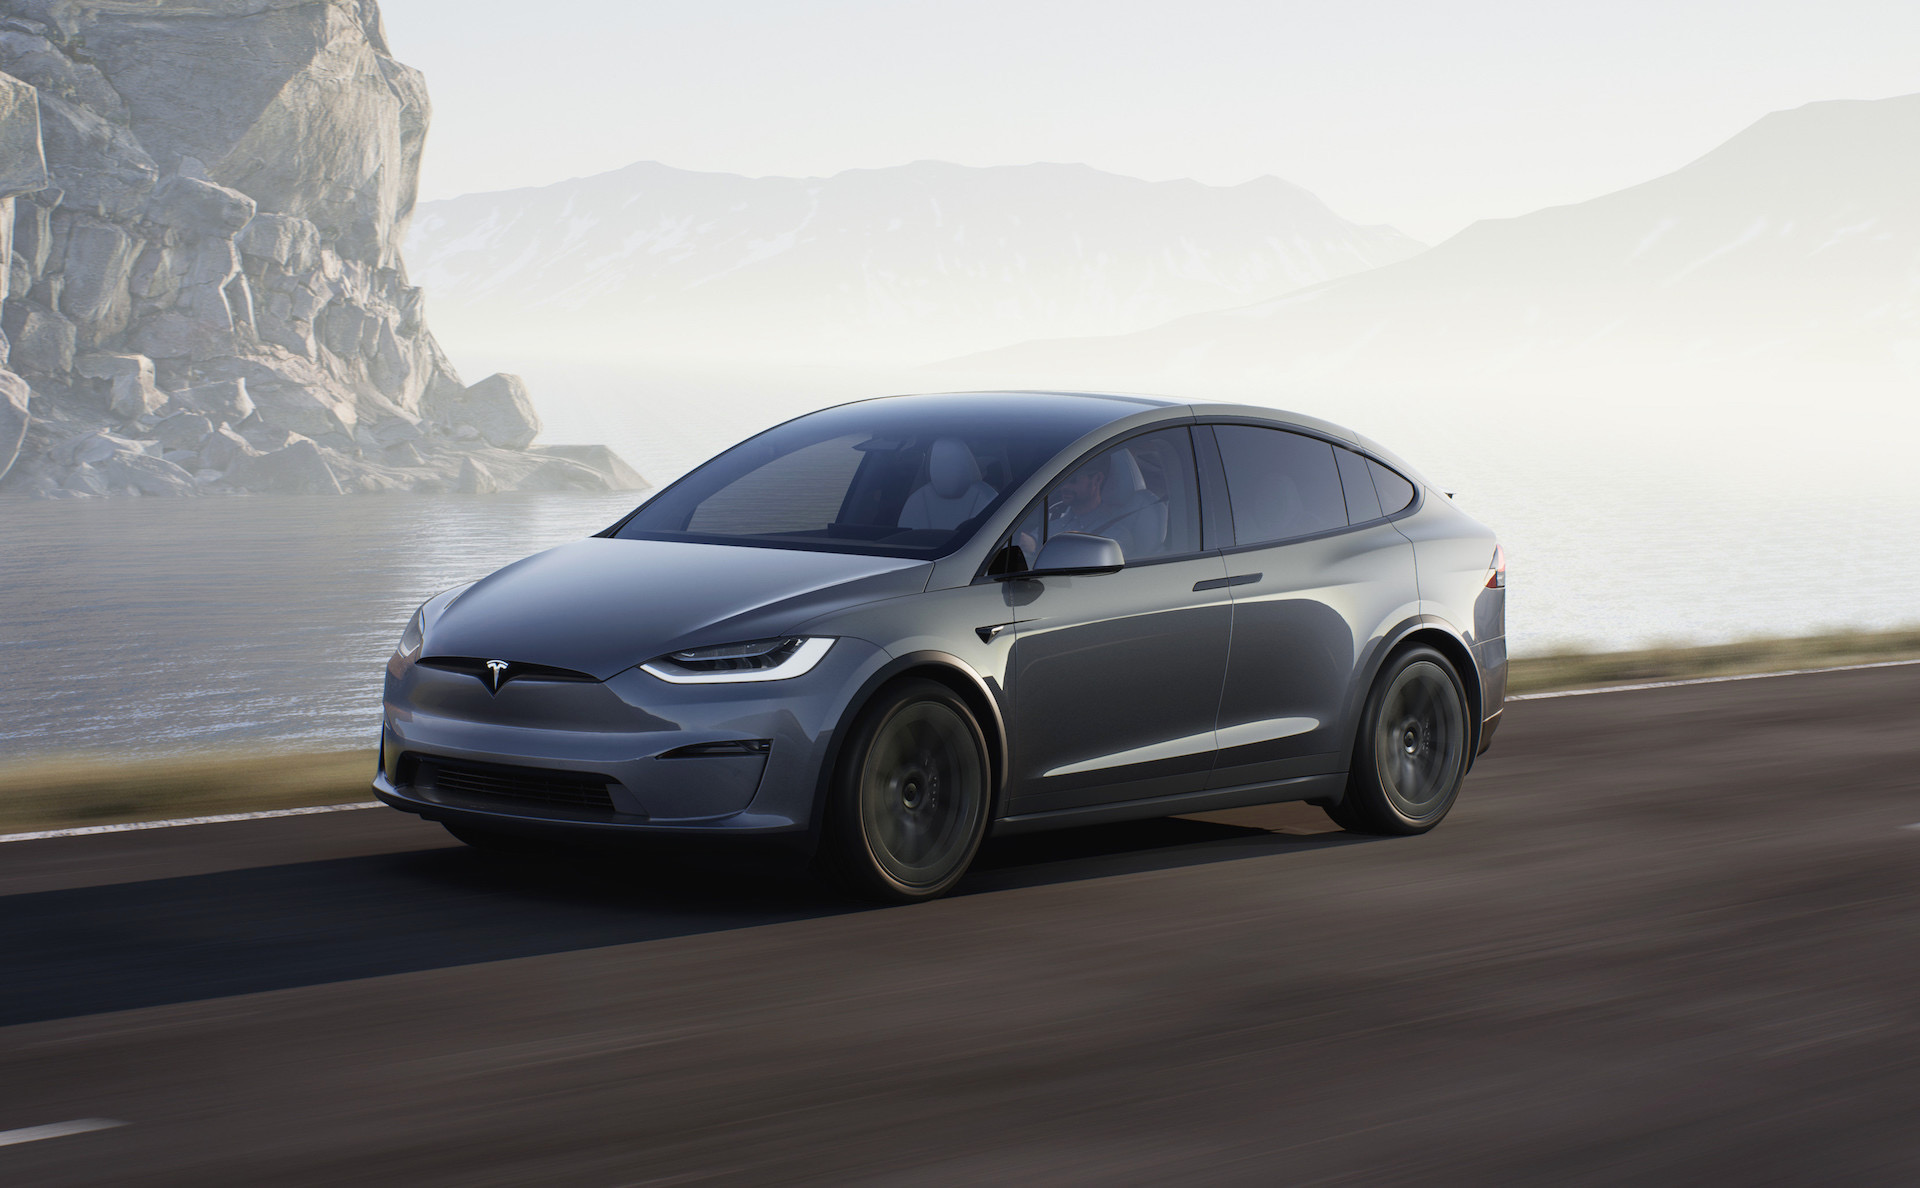 Tesla sets record global deliveries in Q1, 2022